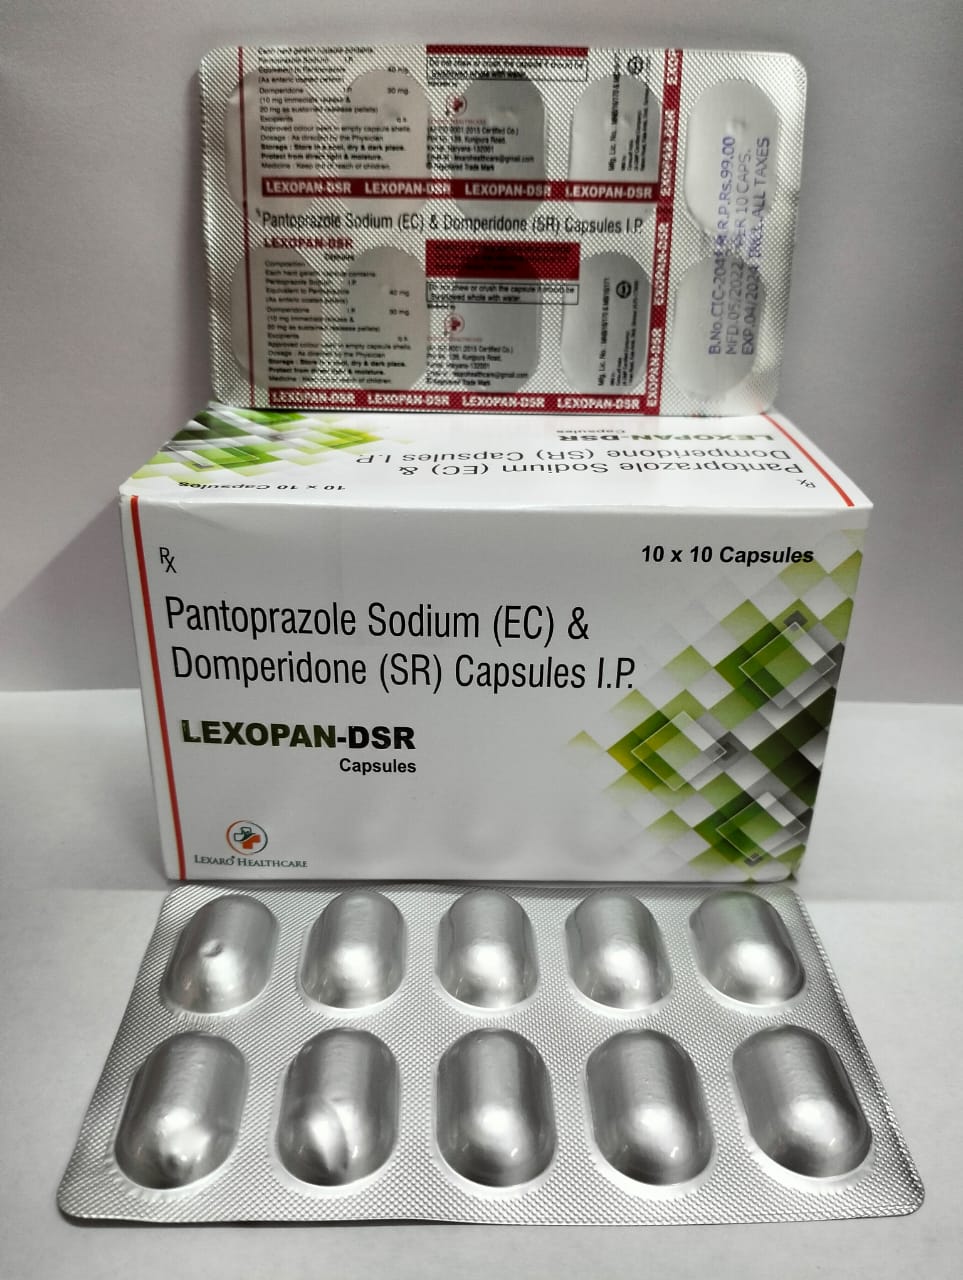 enteric coated pantoprazole sodium
40mg + domperidone 30mg sr